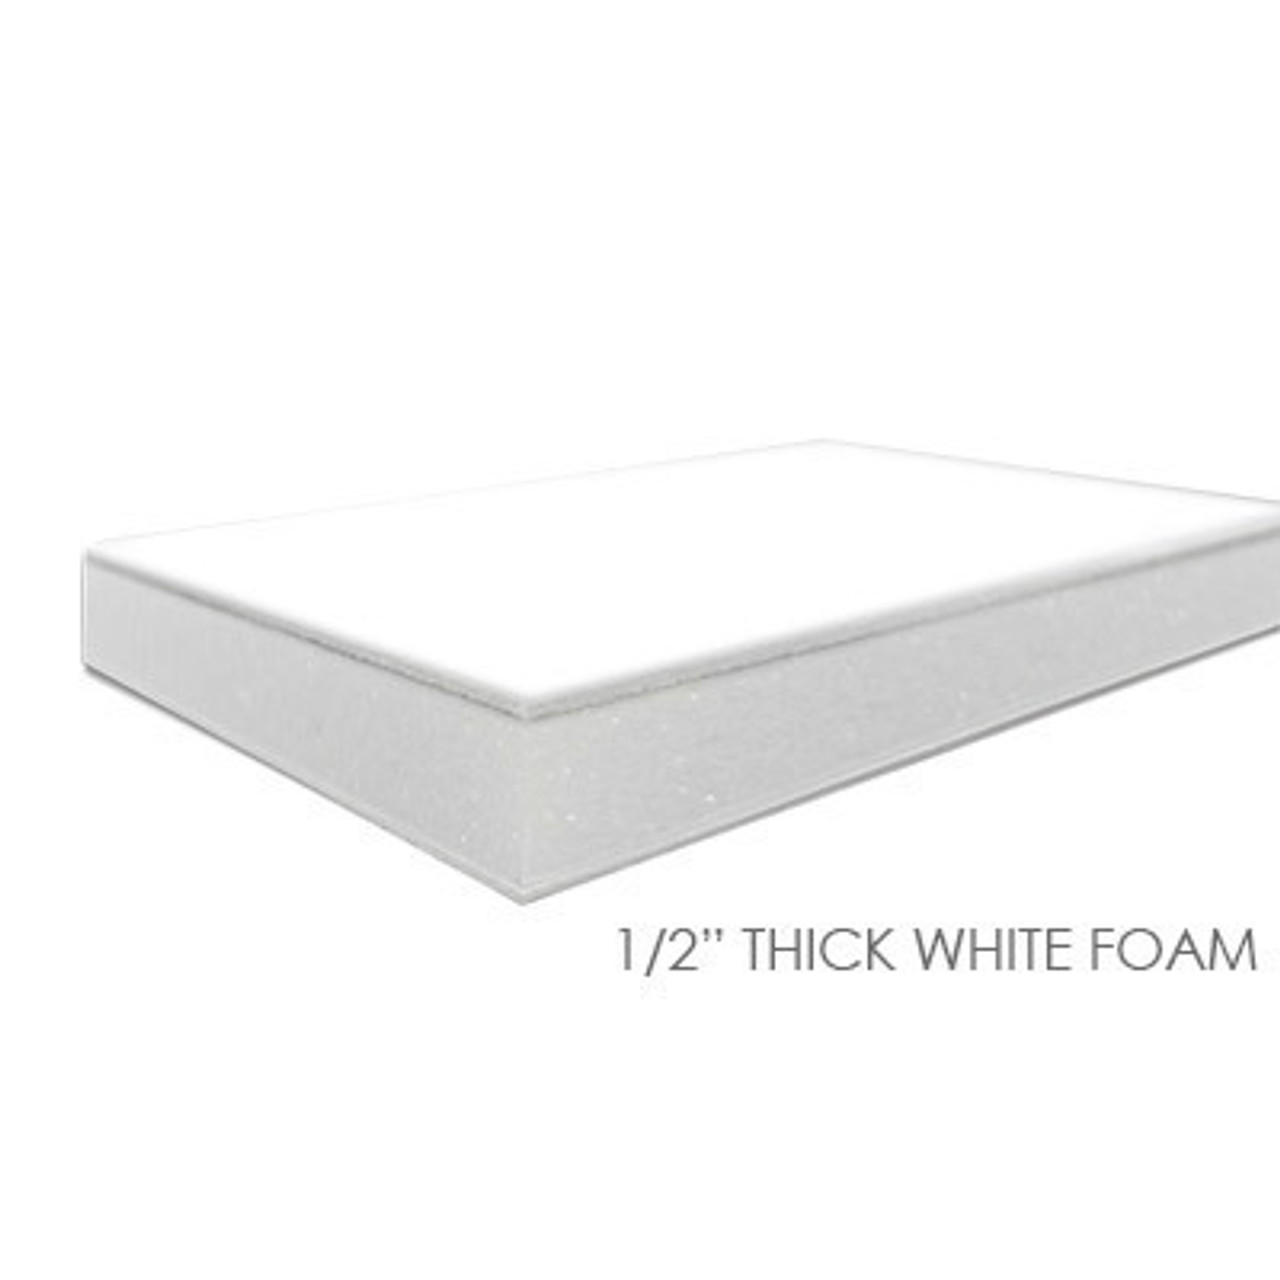 24x36 Foam Board Printing, Upload Your Design